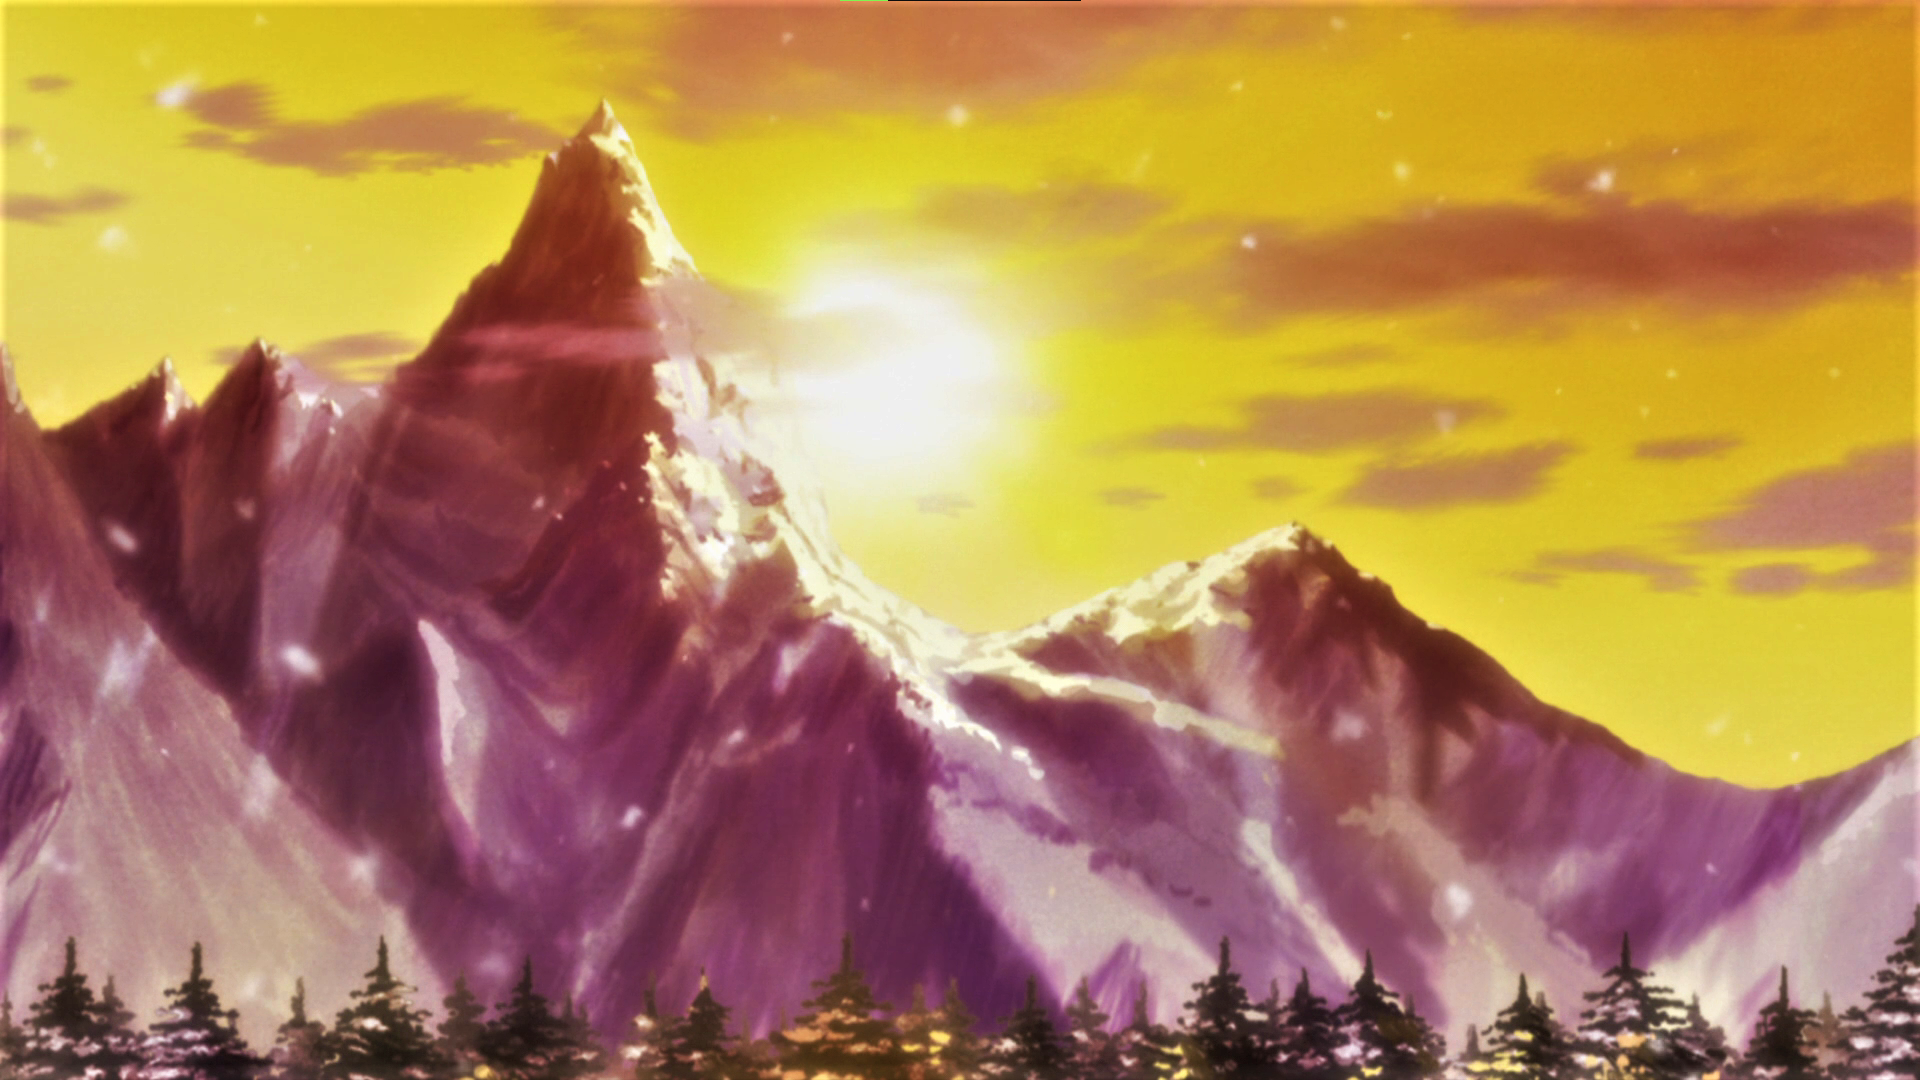 Anime 1920x1080 Hunter x Hunter mountains trees Sun sunset sunset glow sky clouds anime Anime screenshot sunlight